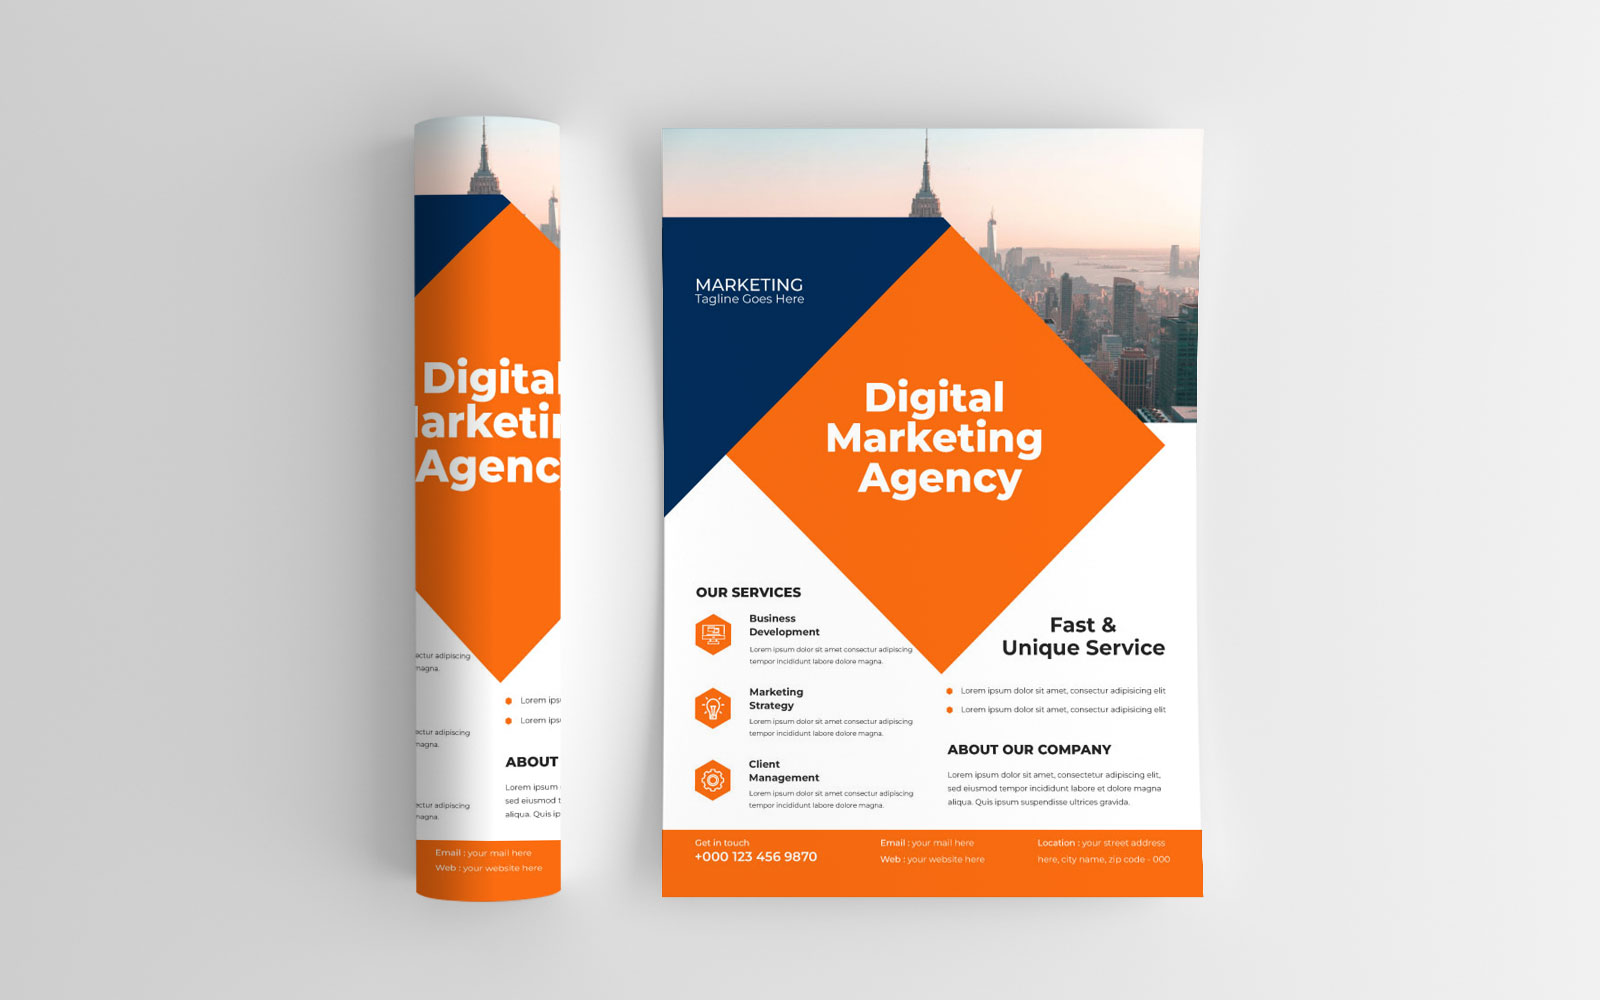 Digital Marketing Agency Leadership Development Program Flyer